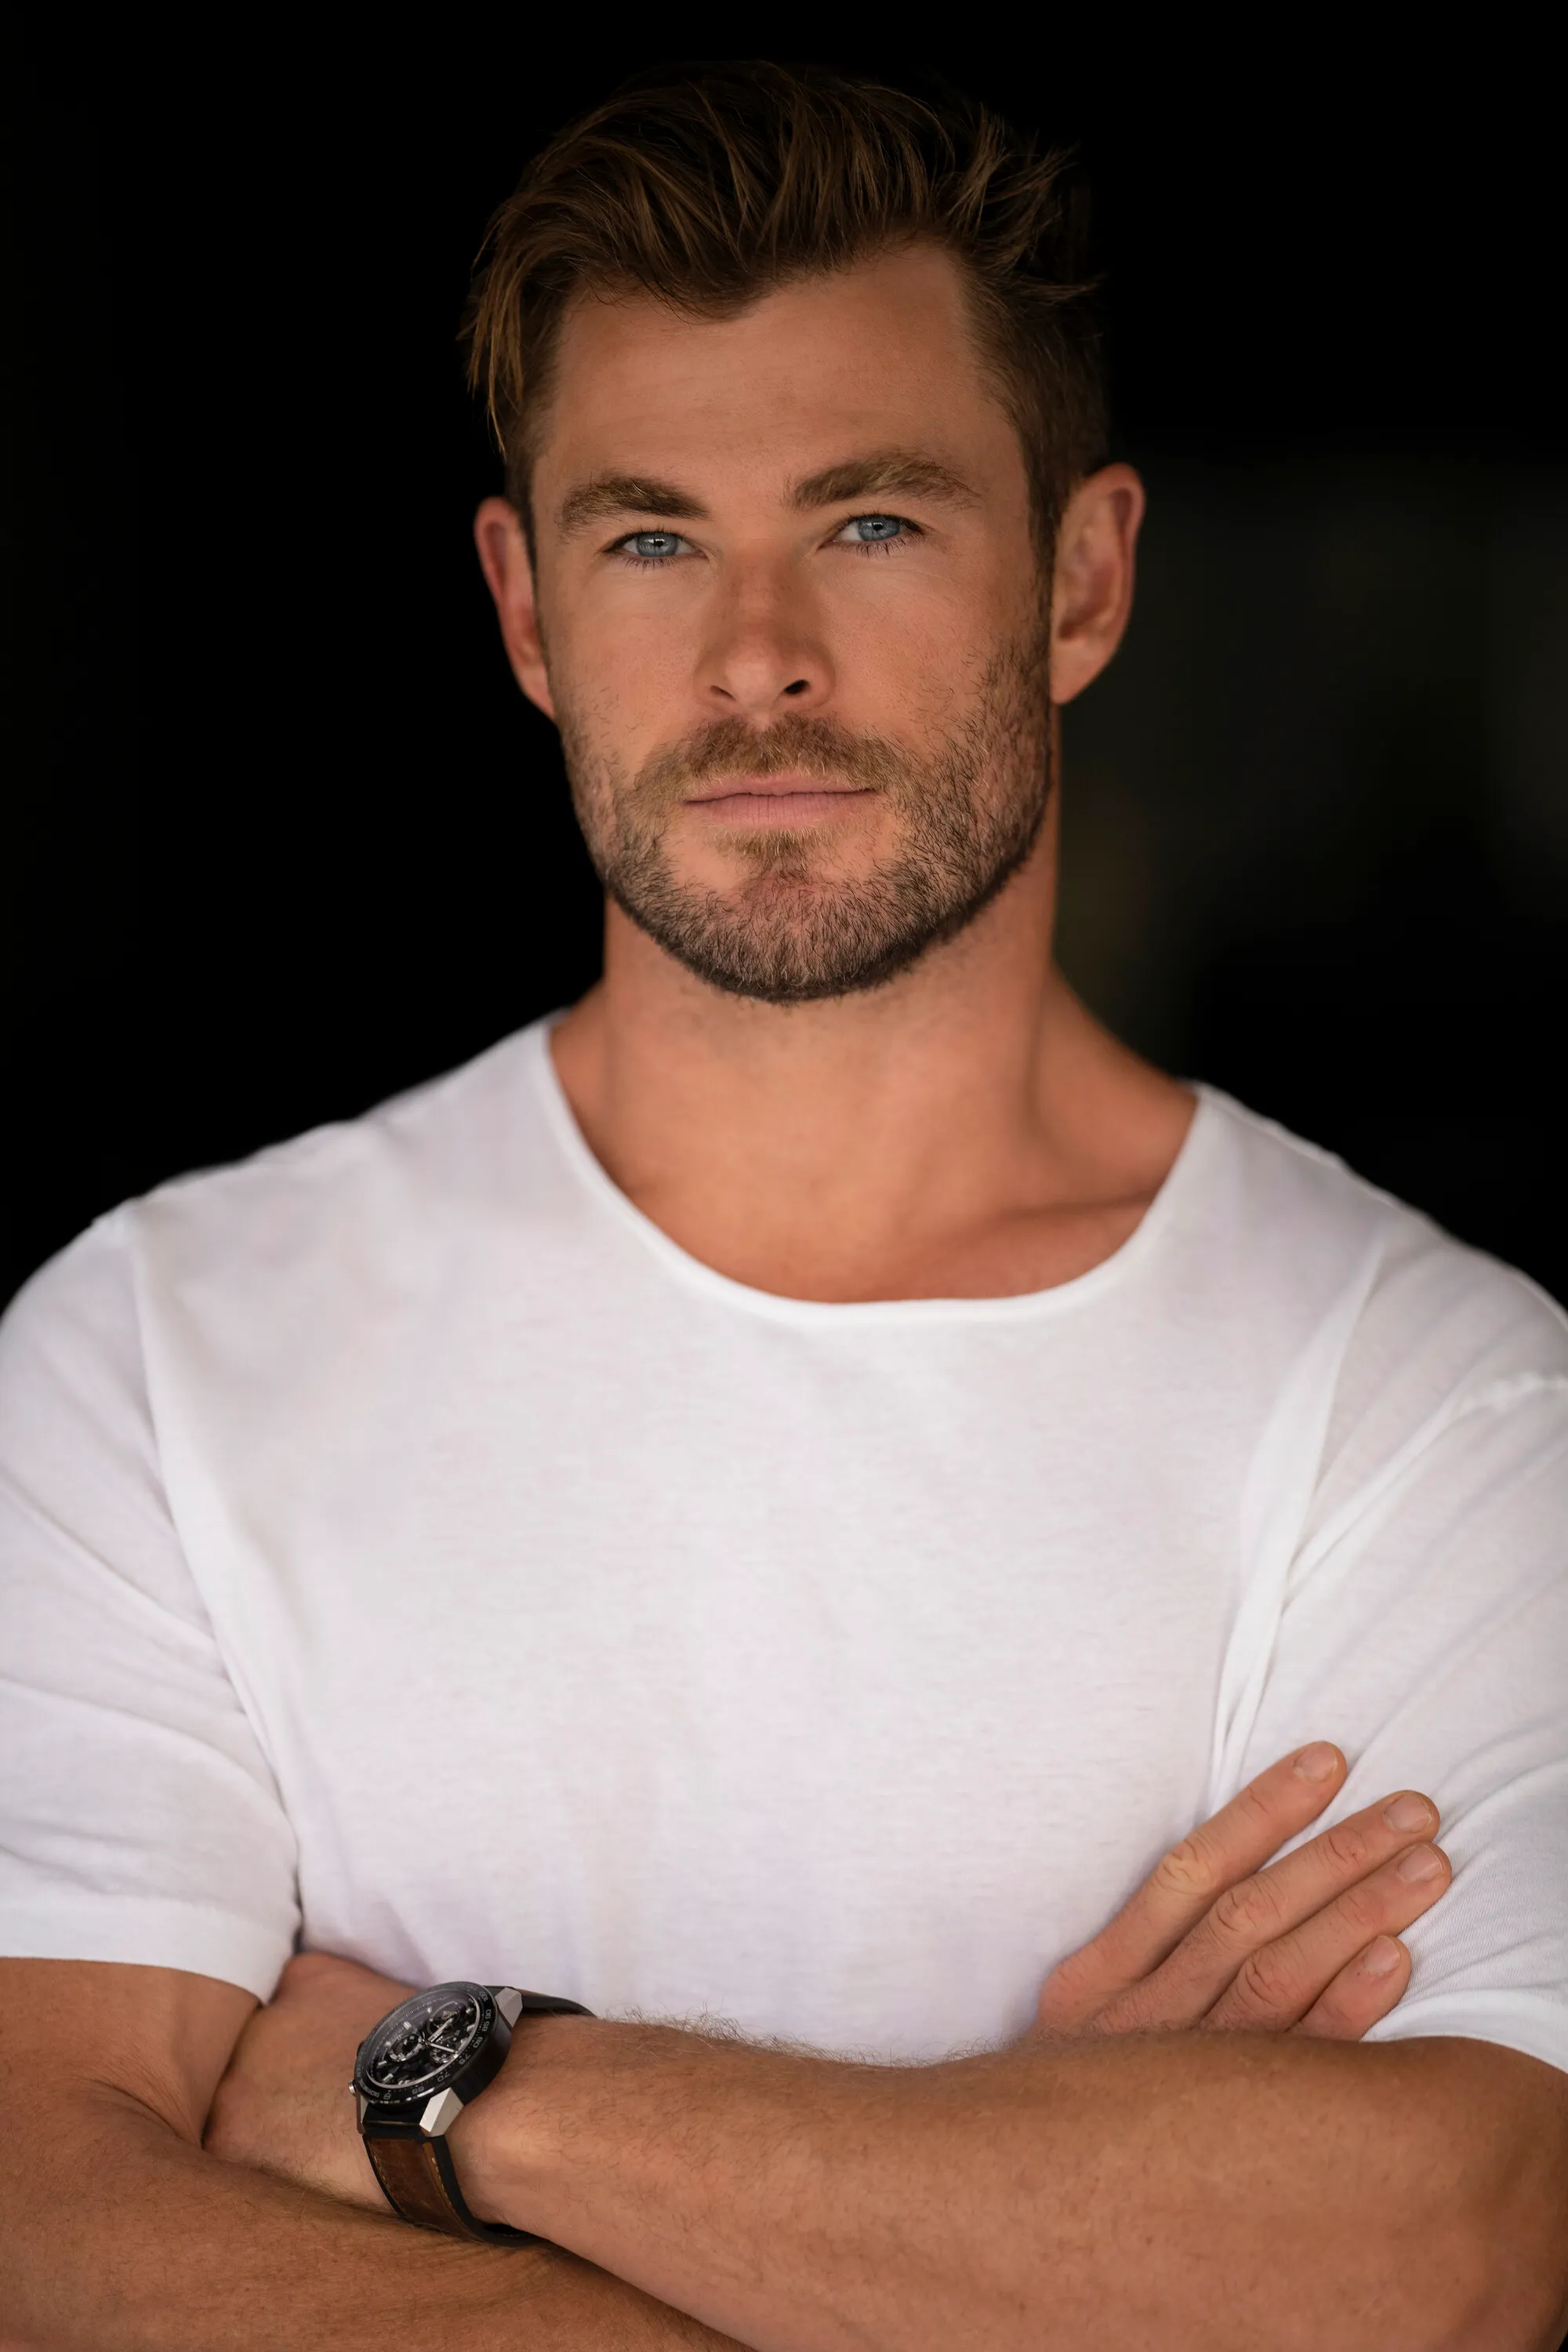 Chris Hemsworth is considering taking his work slow